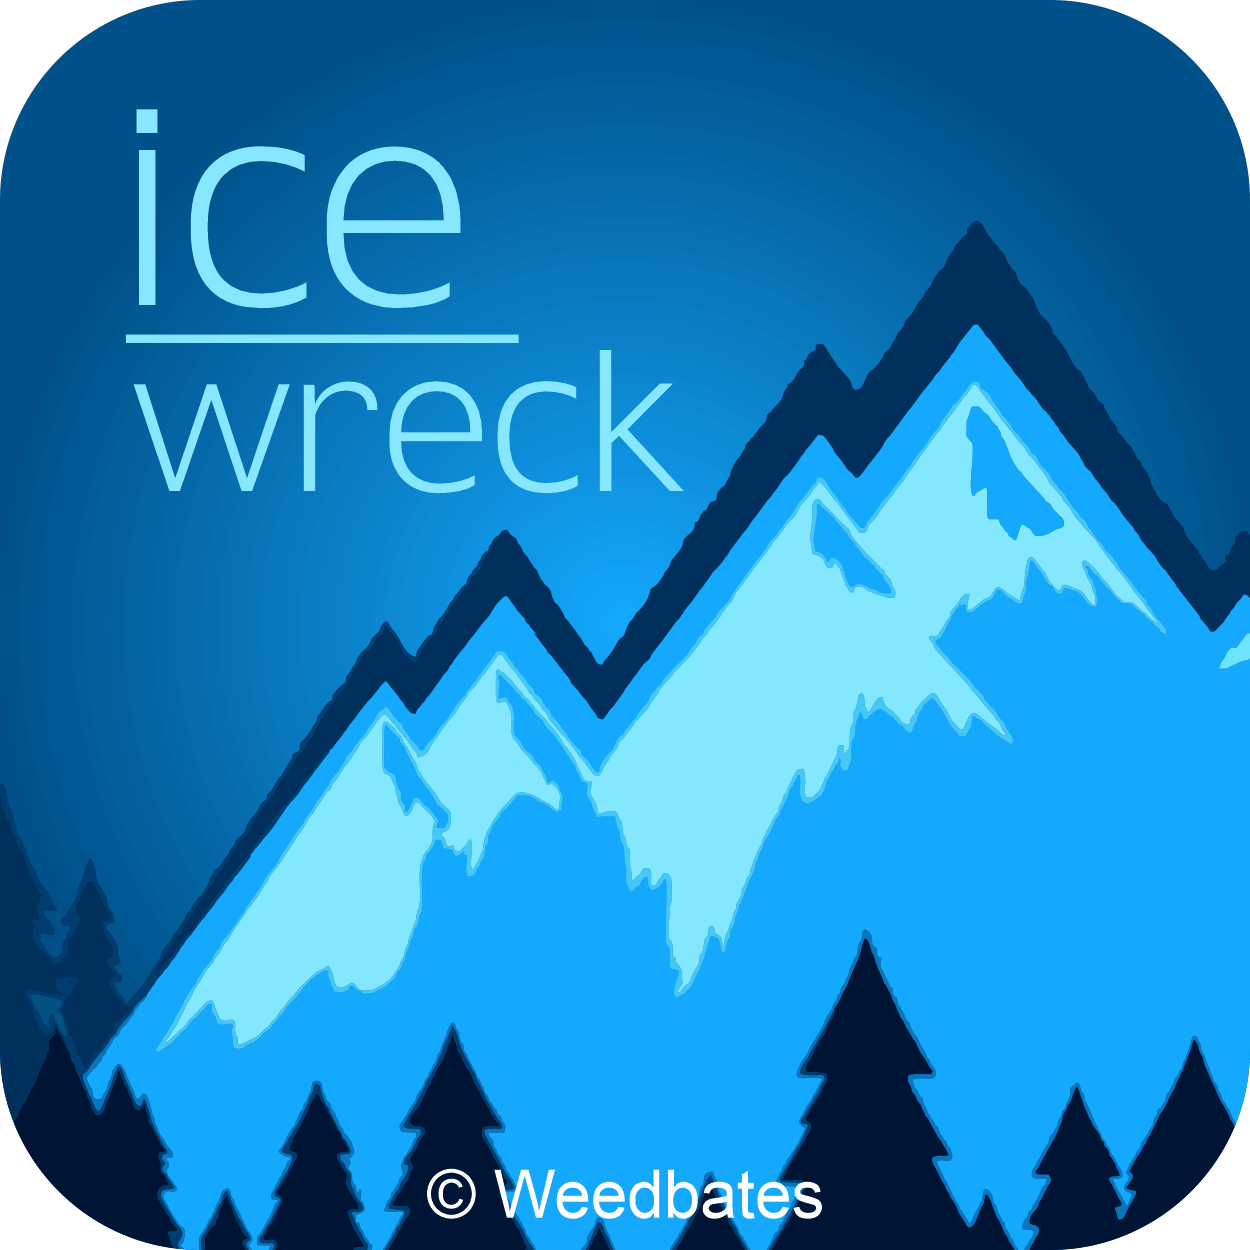 Ice Wreck strain